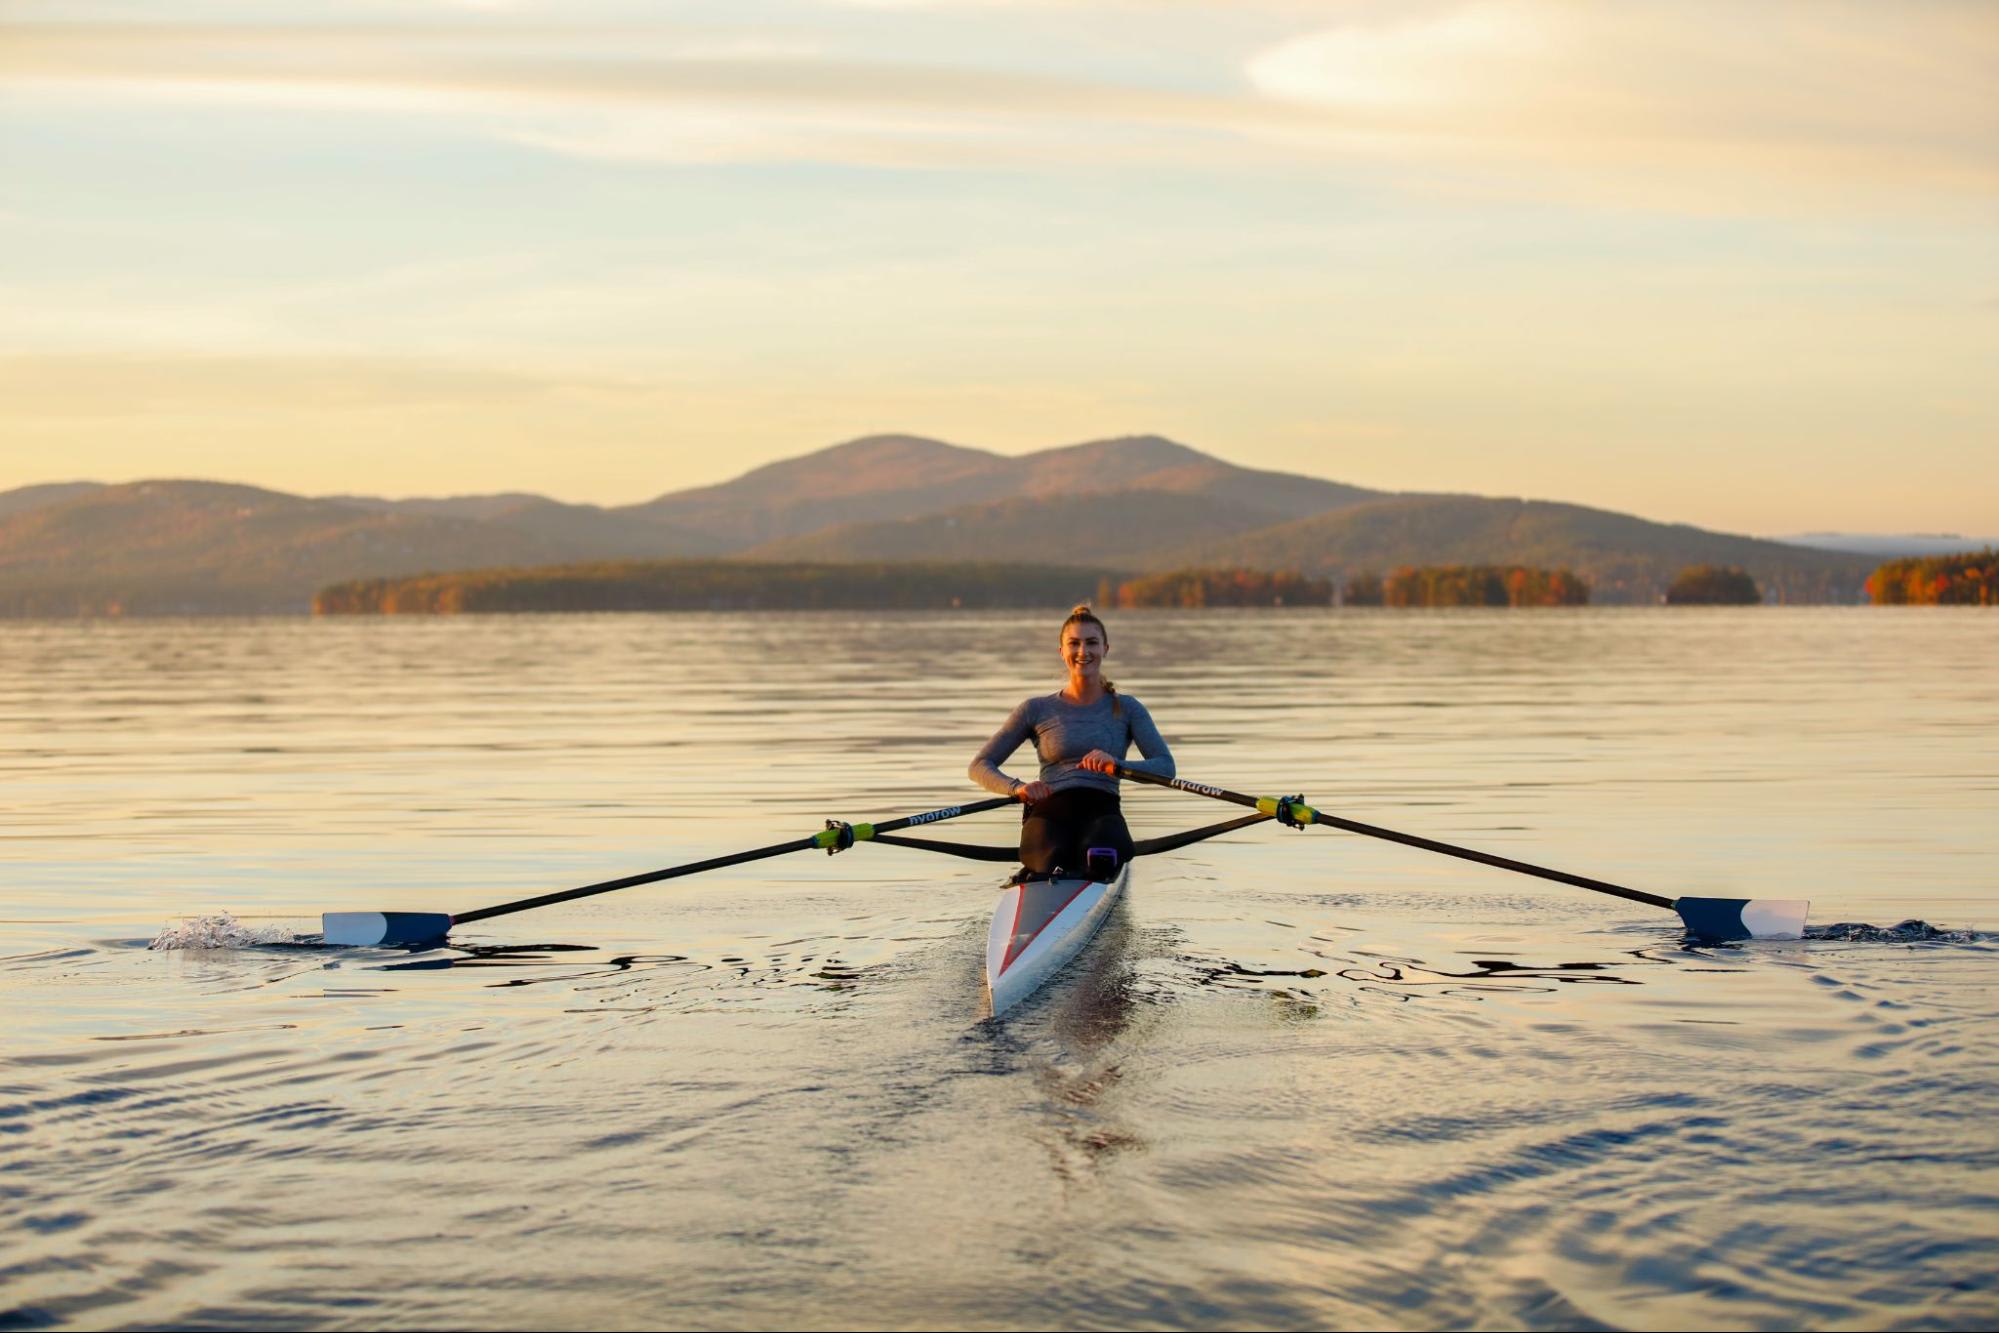 6 Amazing Rowing Machine Benefits